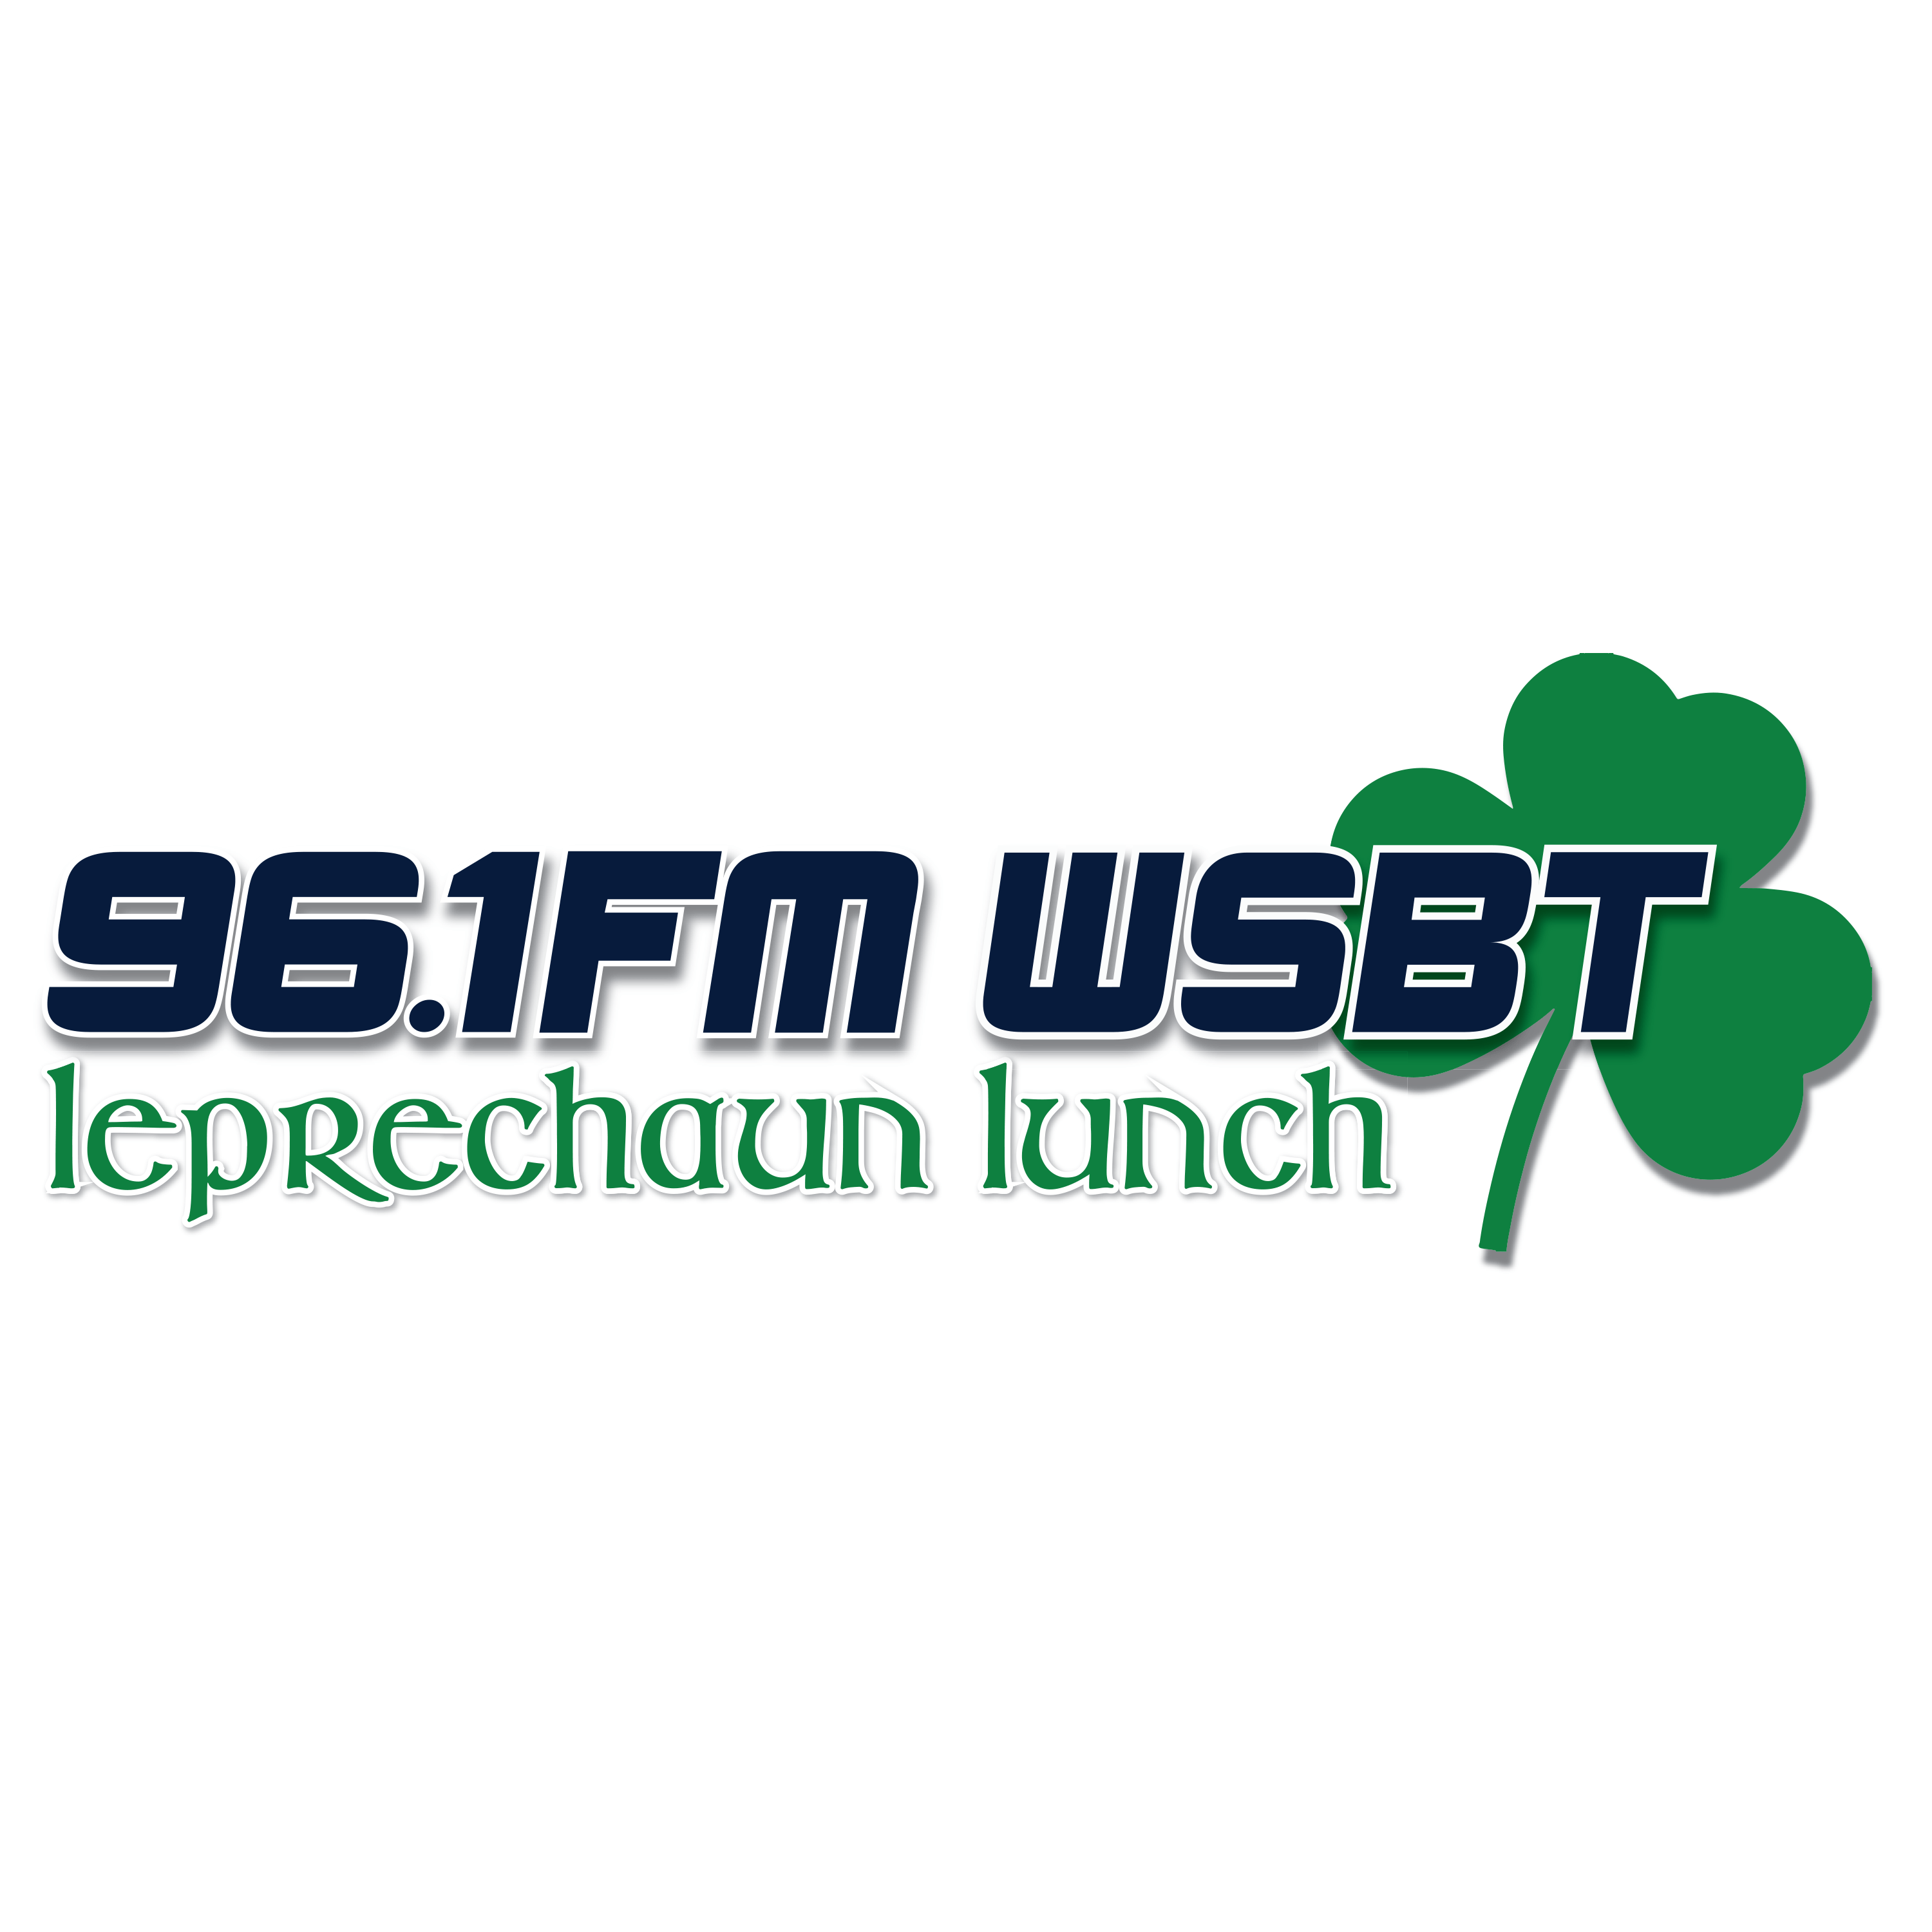 Leprechaun Lunch Highlights – 96.1 WSBT Radio